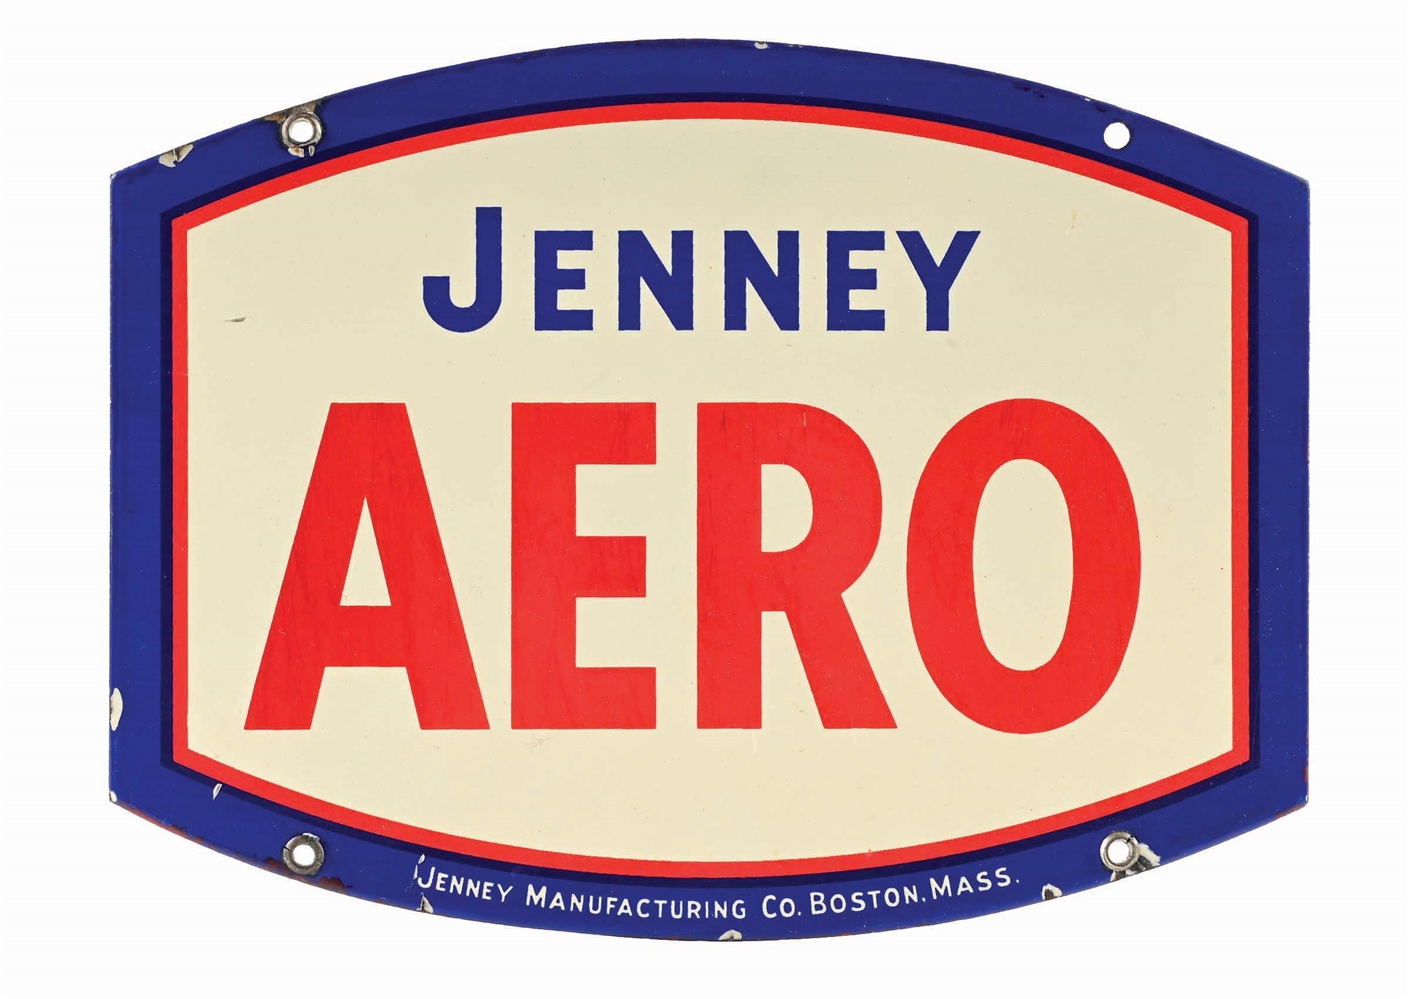 JENNEY AERO GASOLINE PORCELAIN PUMP PLATE SIGN.